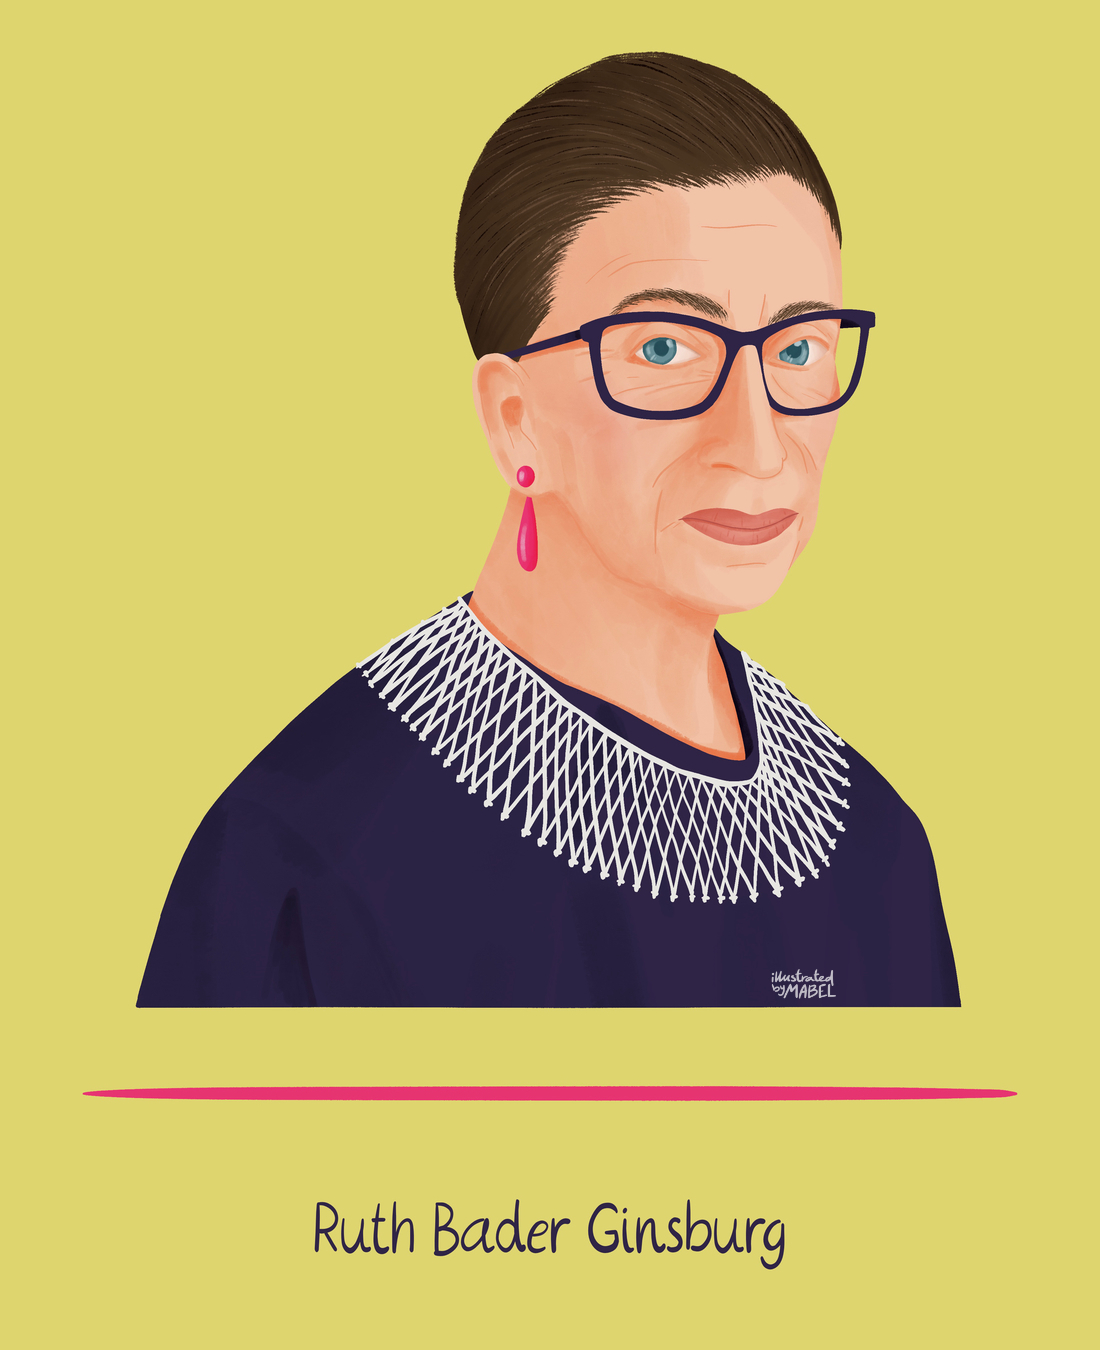 Ruth Bader Ginsburg illustrated portrait